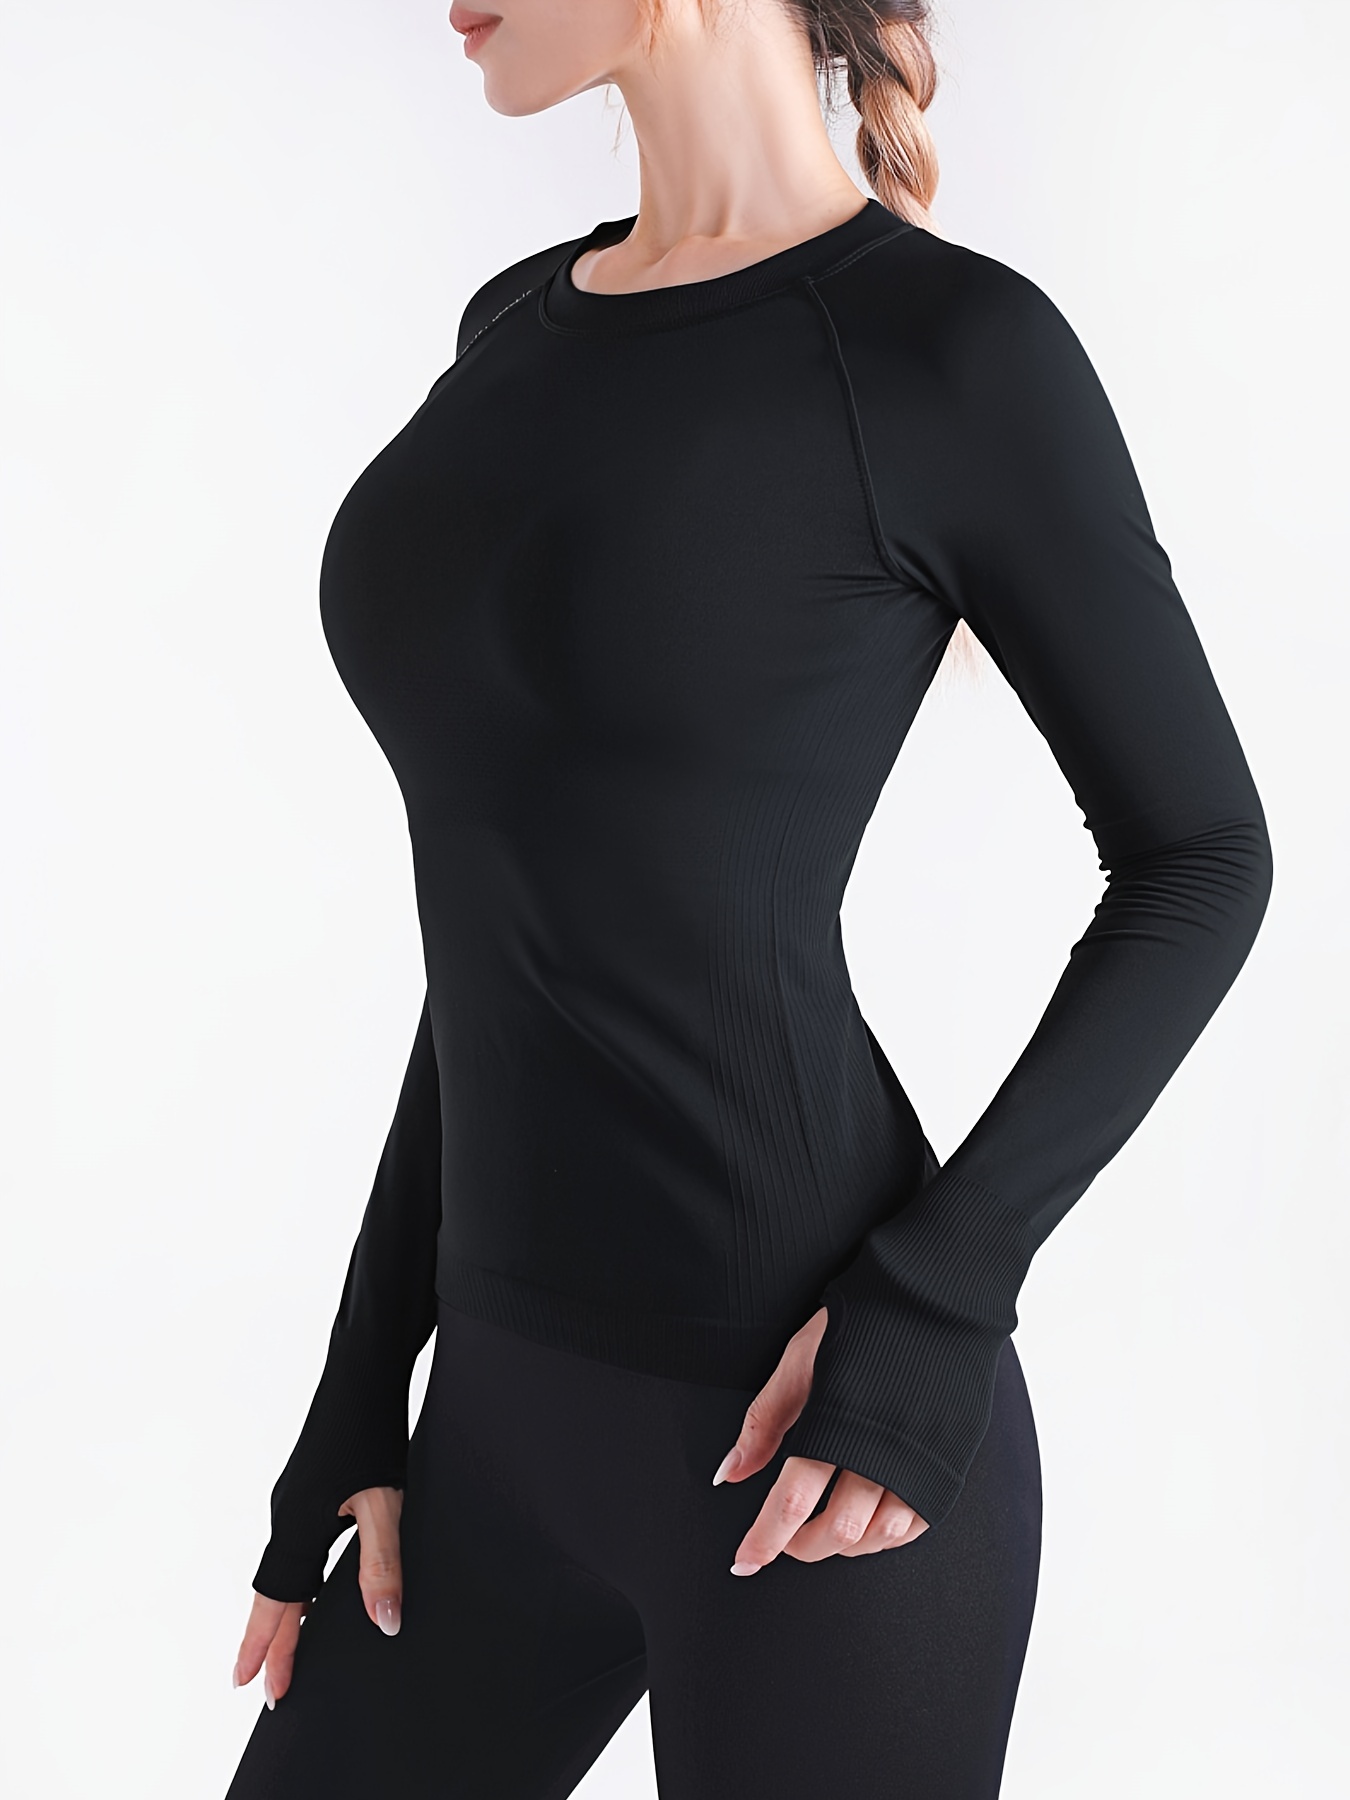 DAVAS Women's Activewear Tops Long Sleeves Elasticity Tight Running Yoga  Shirt Size S Dark Grey: Buy Online at Best Price in UAE 